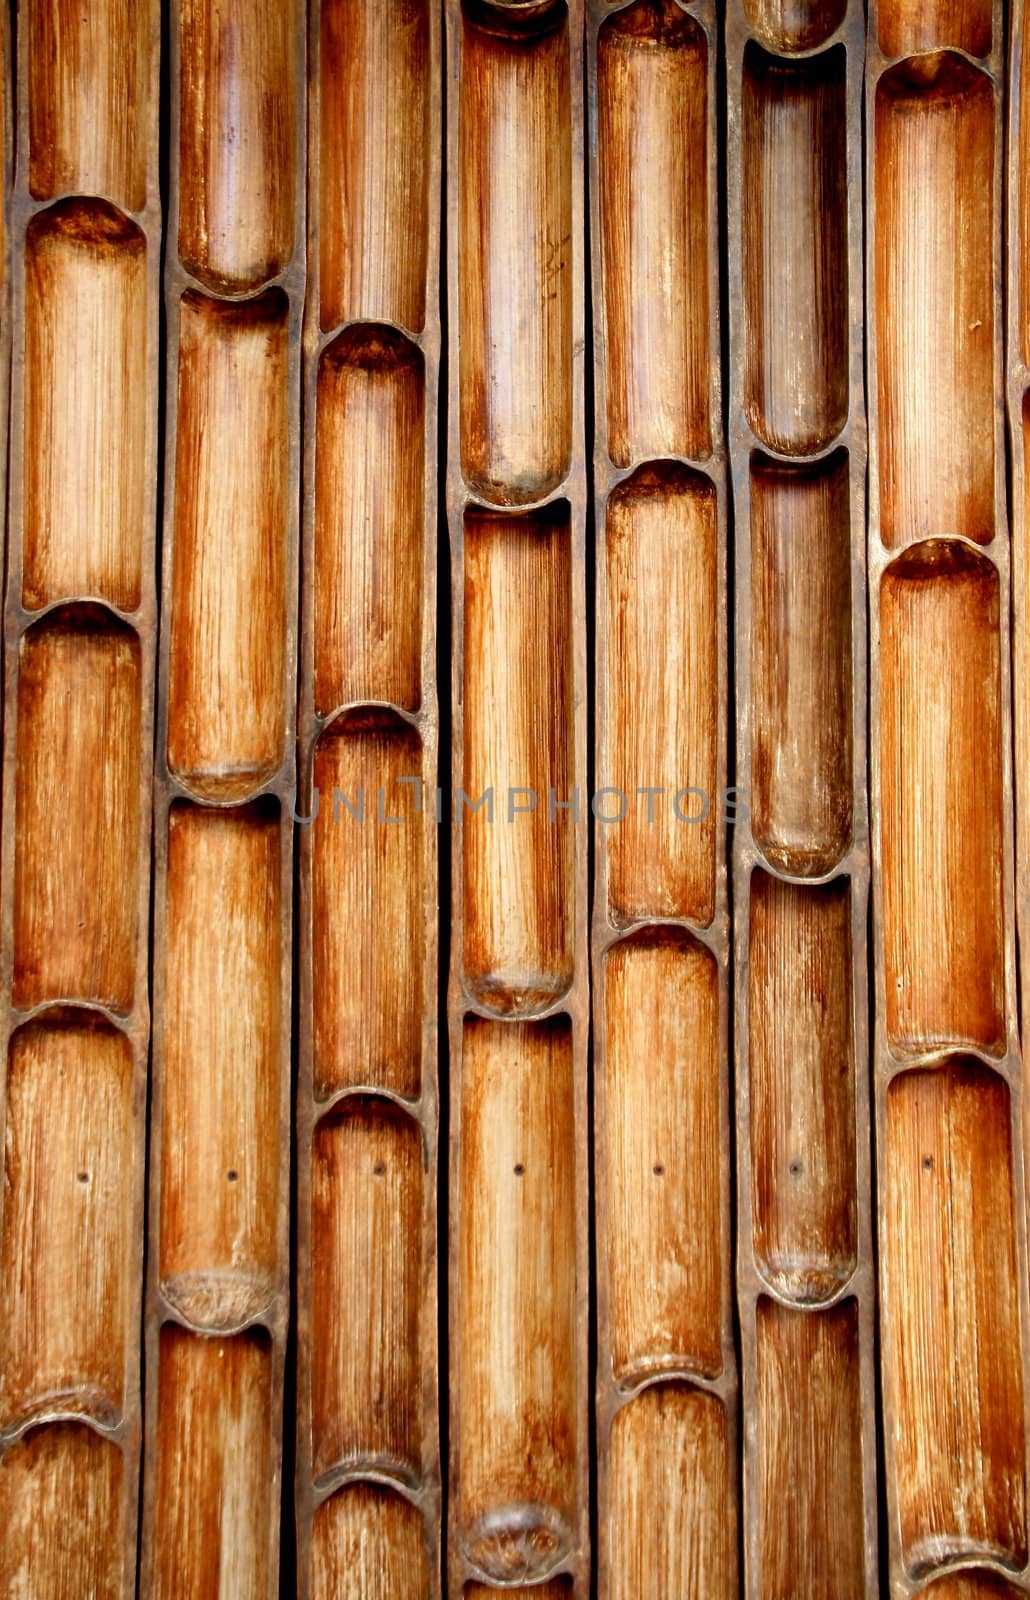 Bamboo wall with natural patterns